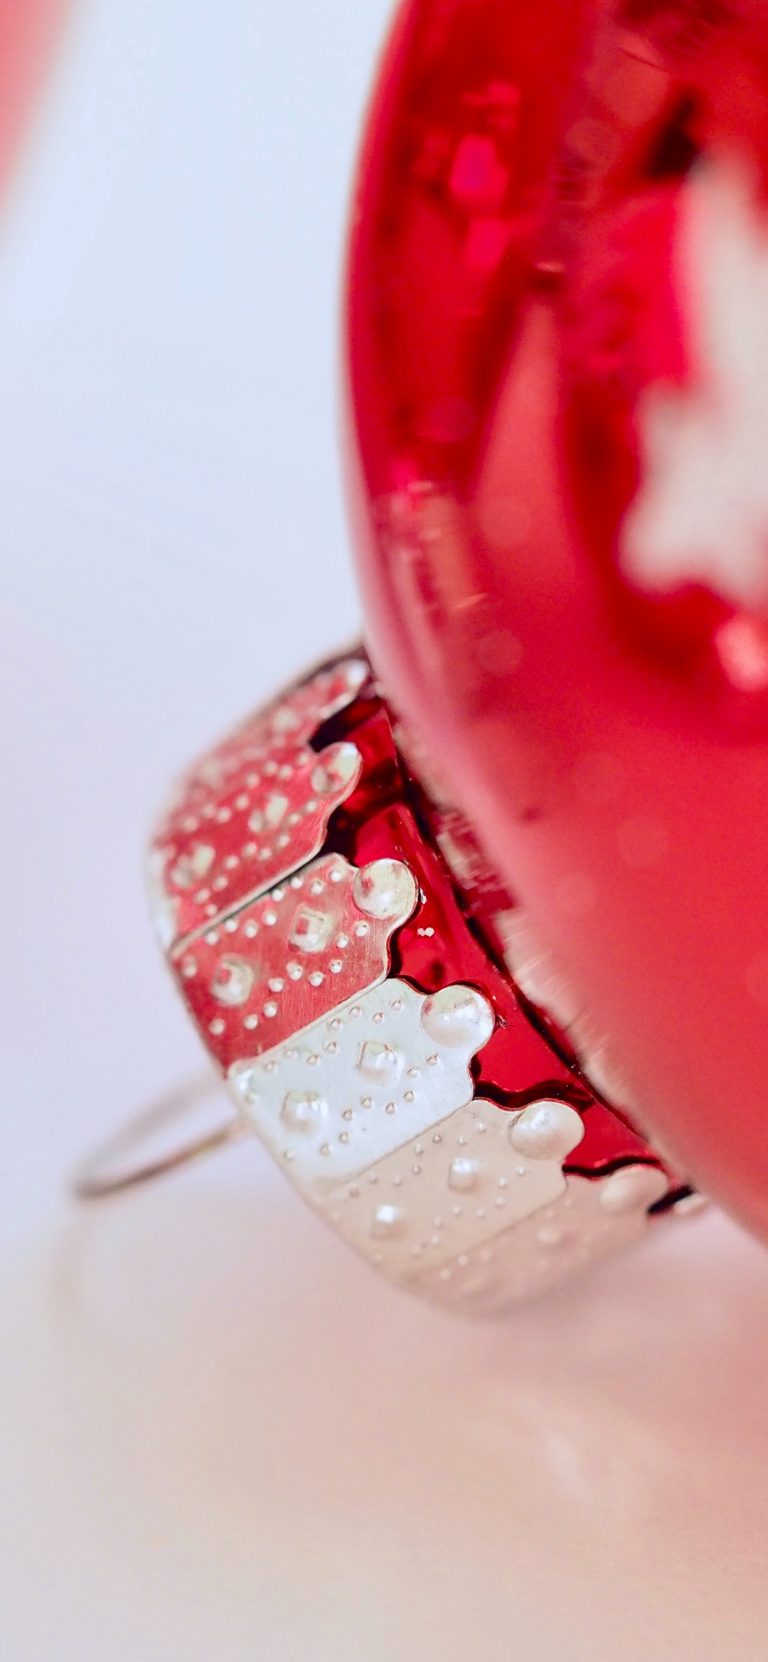 plush-design-studio-unsplash-christmas-ornament-red-ball-iphone-wallpaper-768×1662